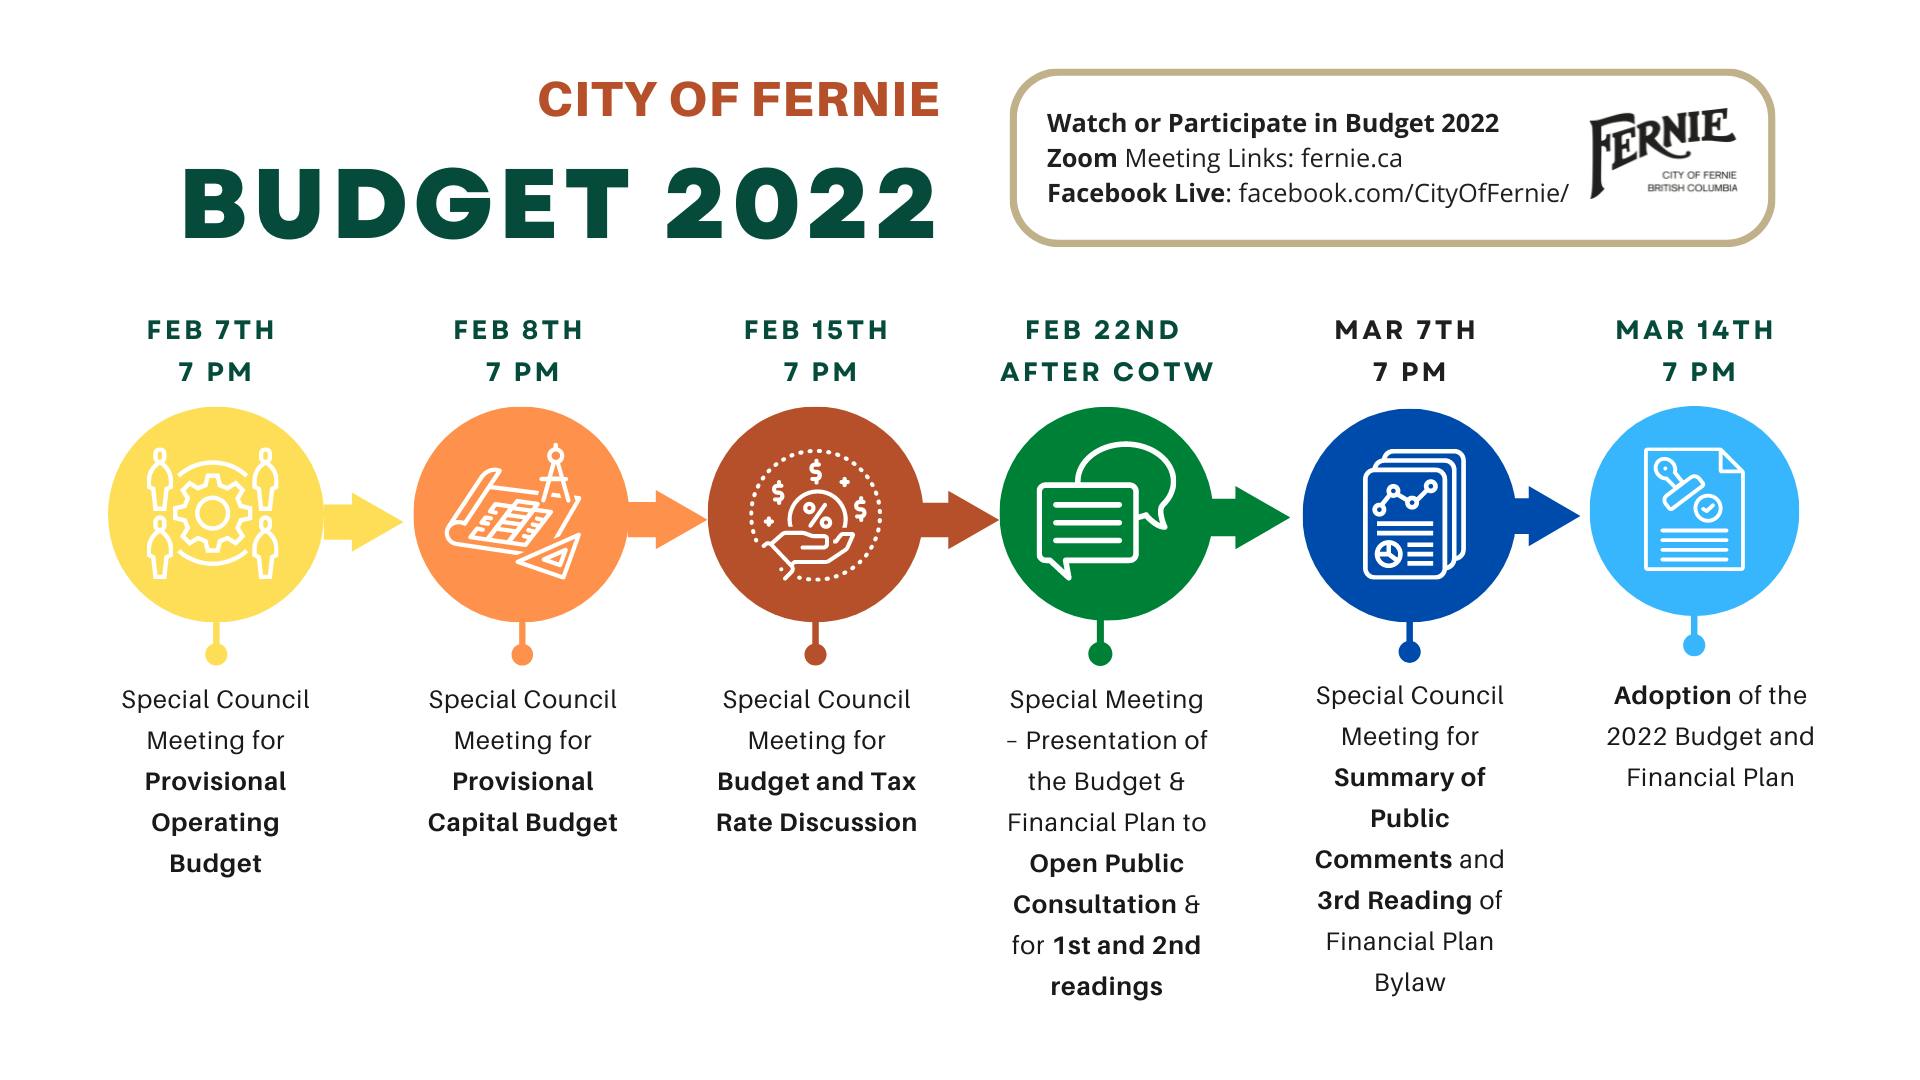 Budget 2022 Process